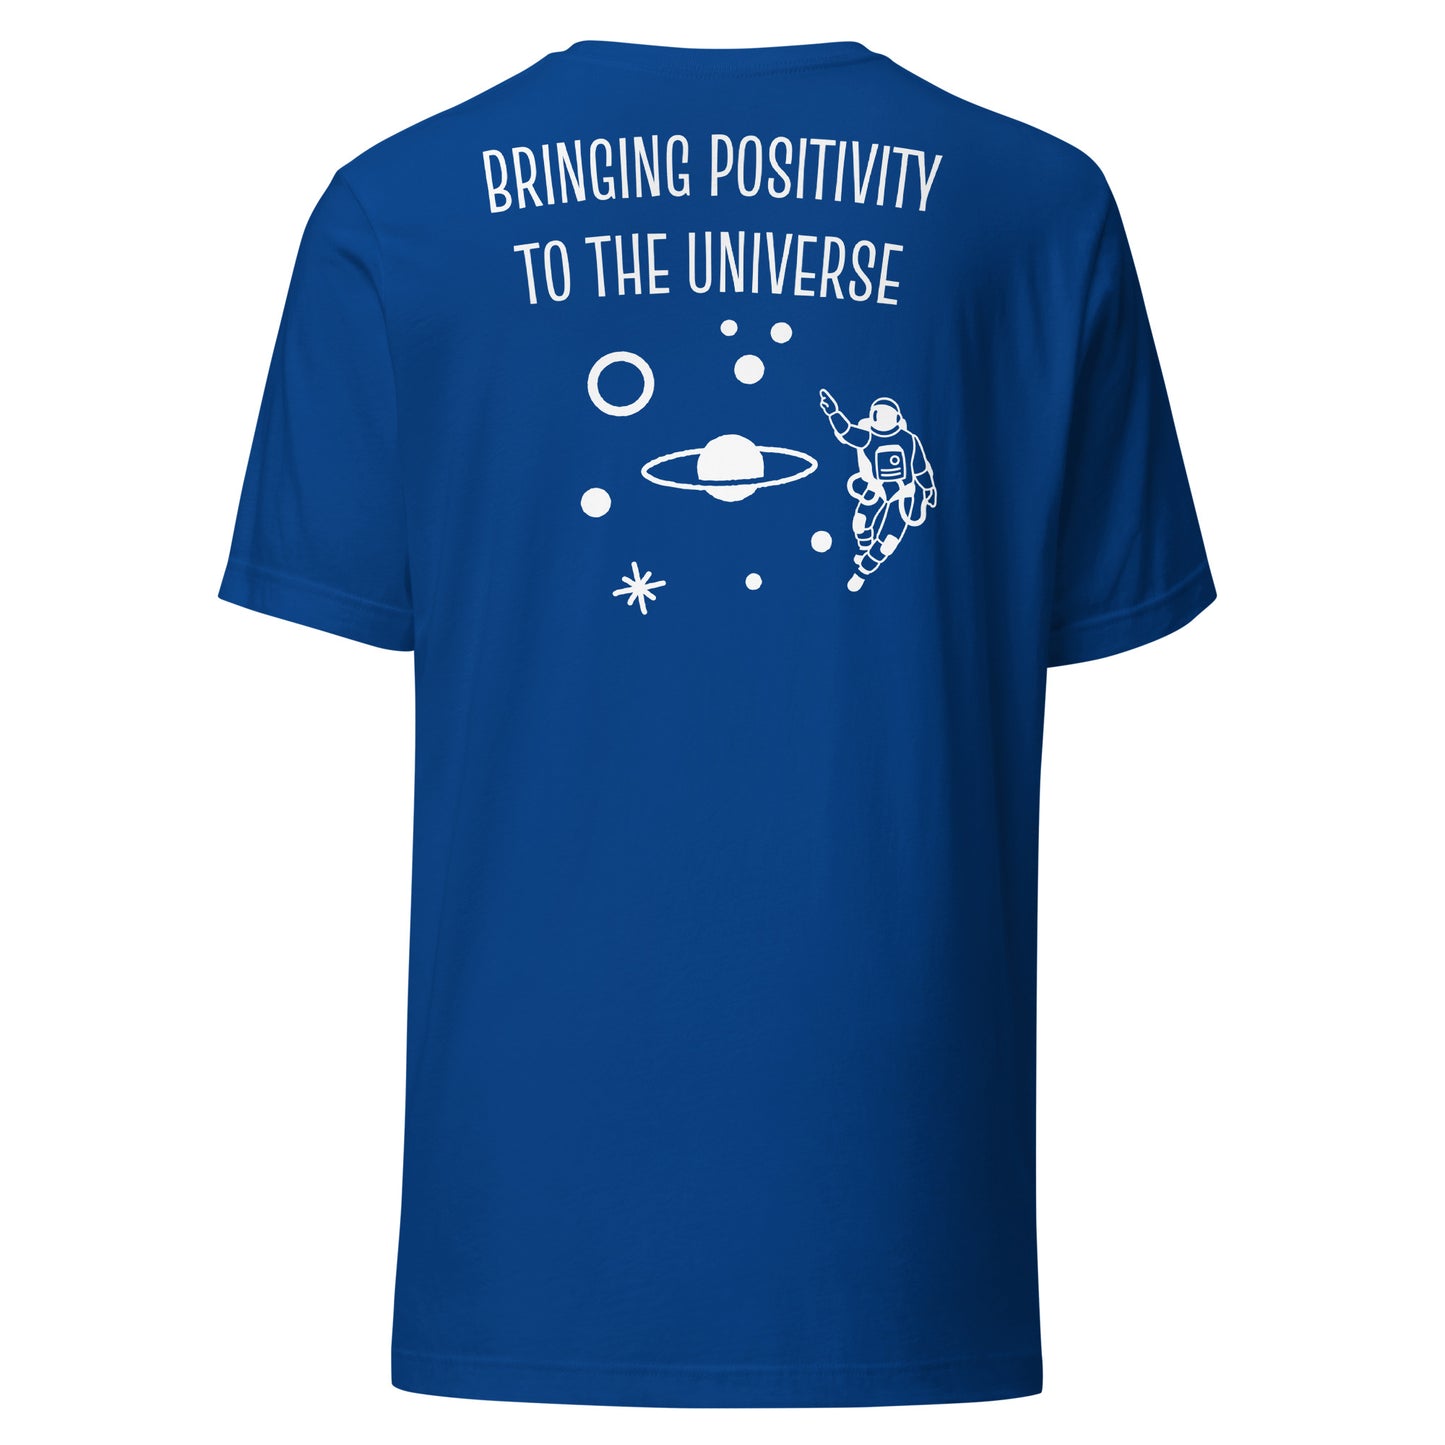 U.C Logo Bringing Positivity t-shirt